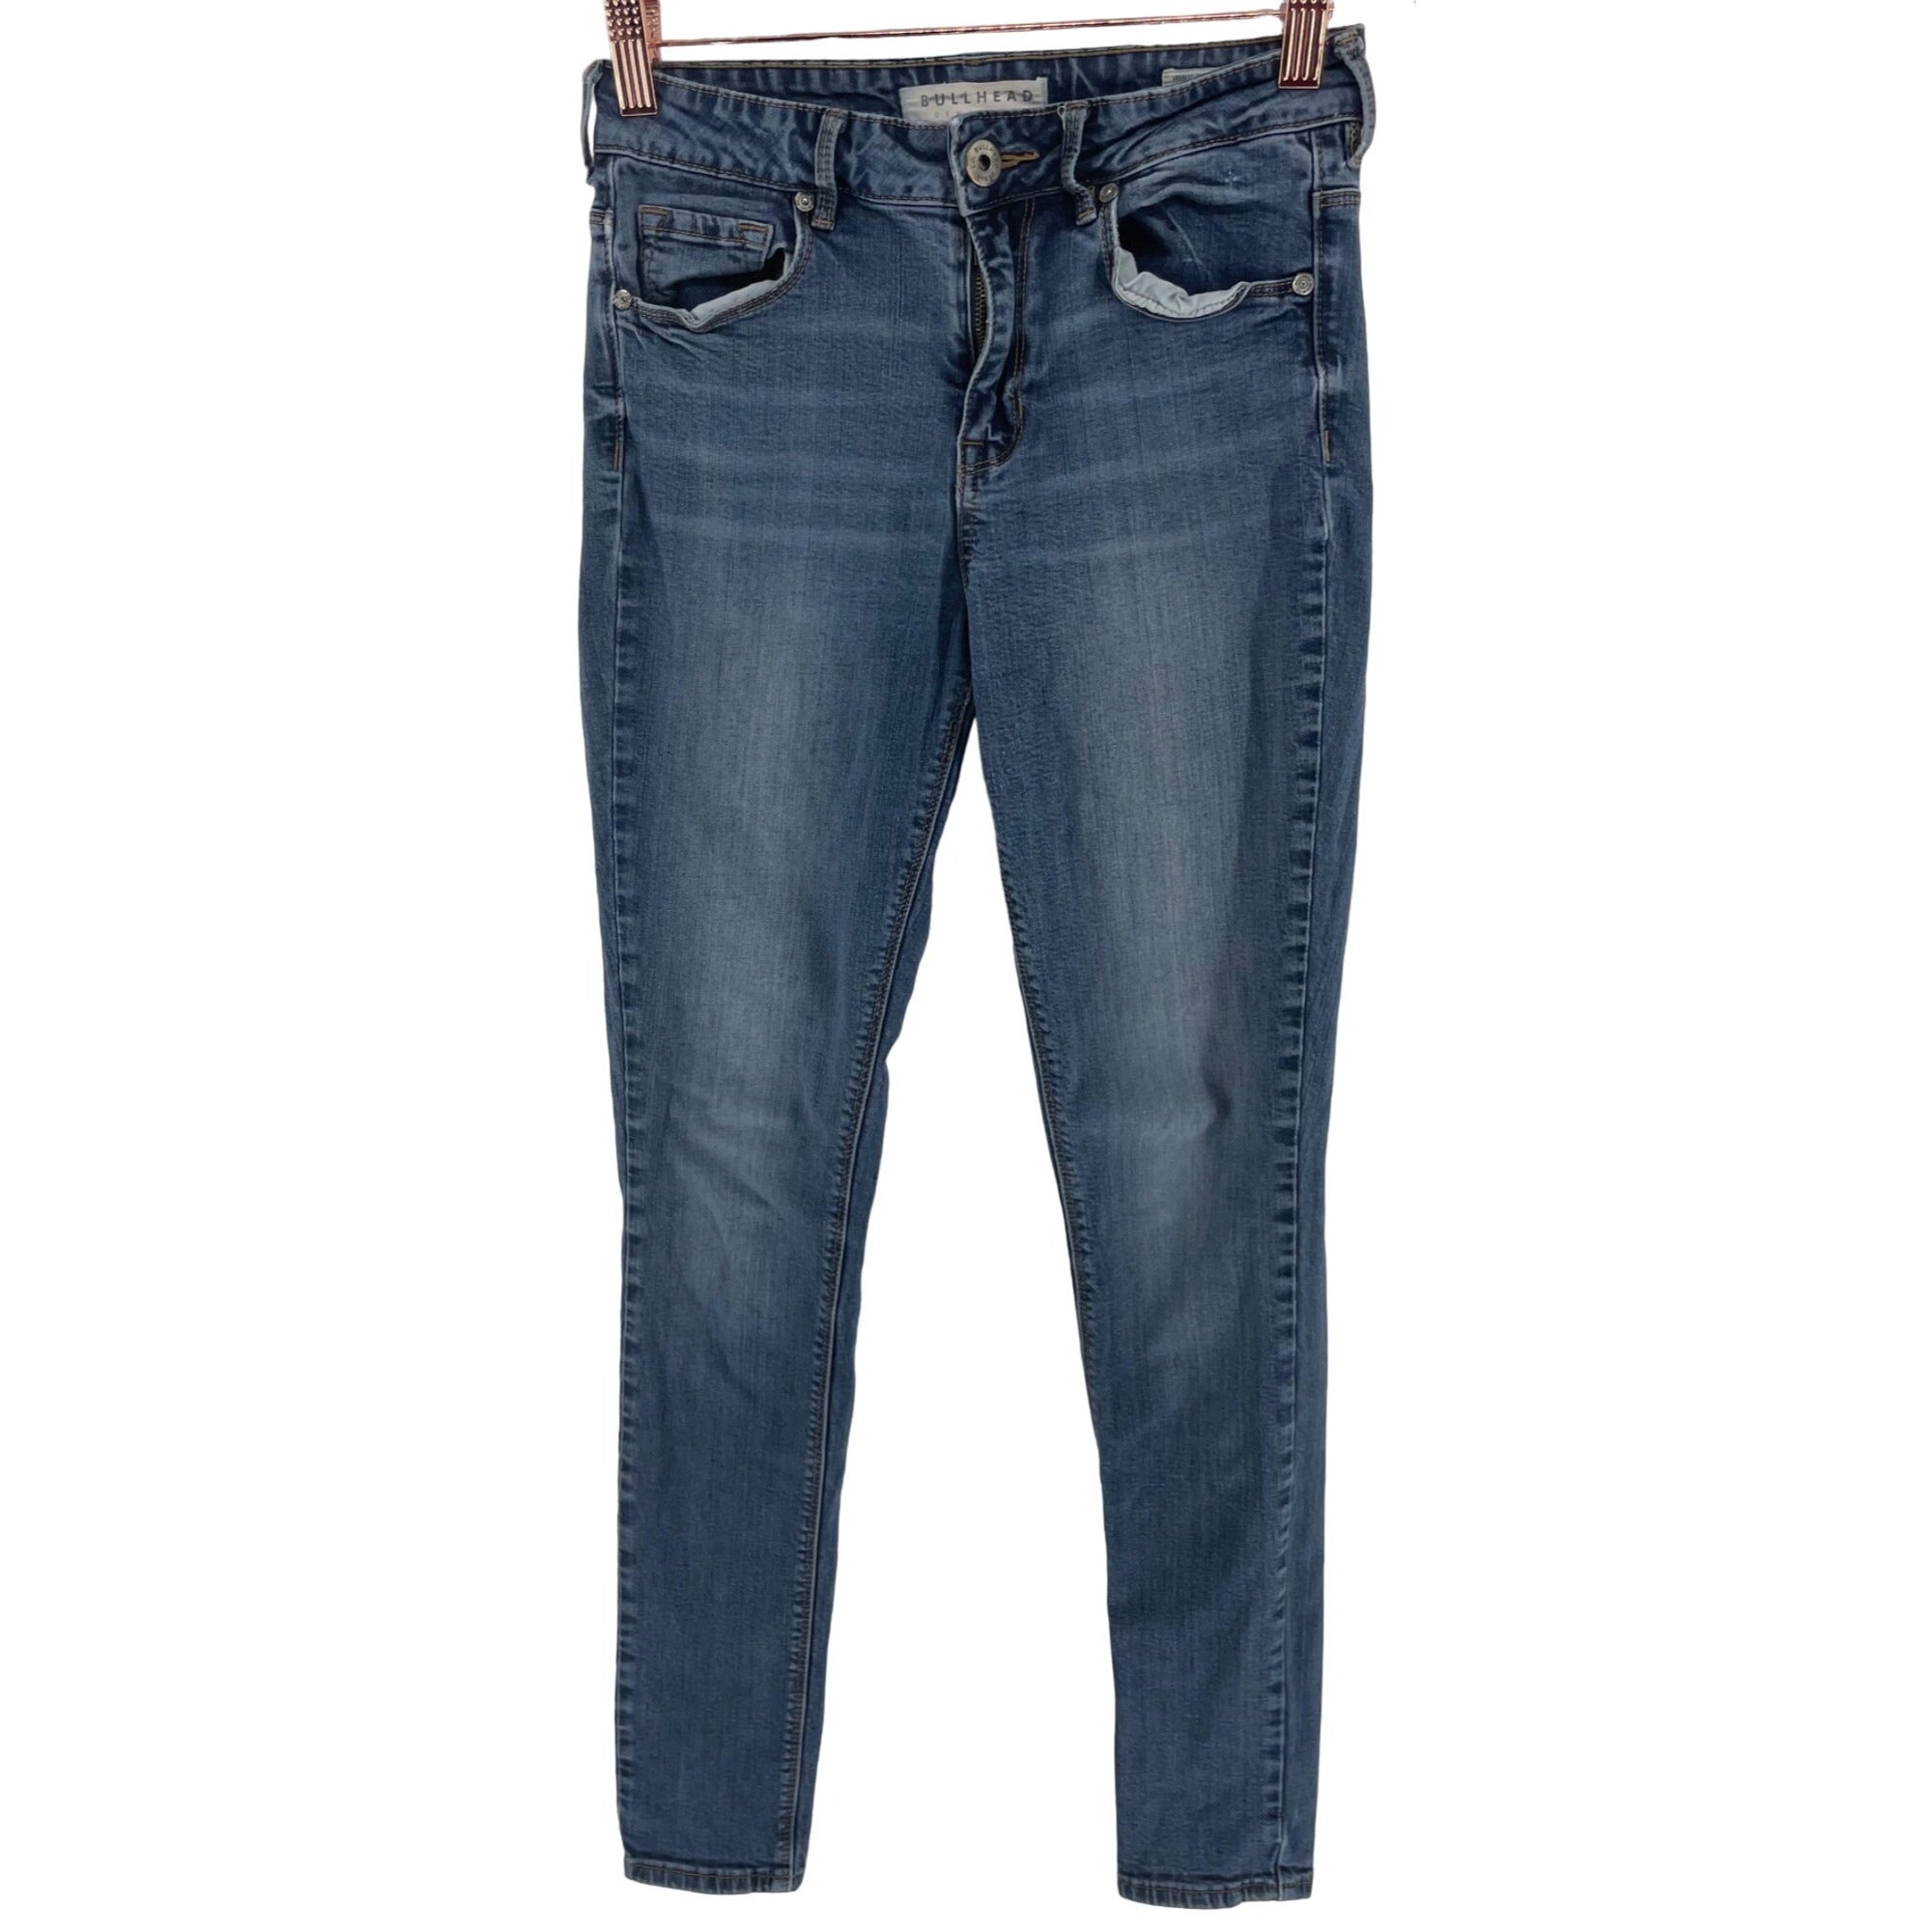 Bullhead Denim Co. Women's Size 5 High Rise Skinniest Denim Blue Jean Pants